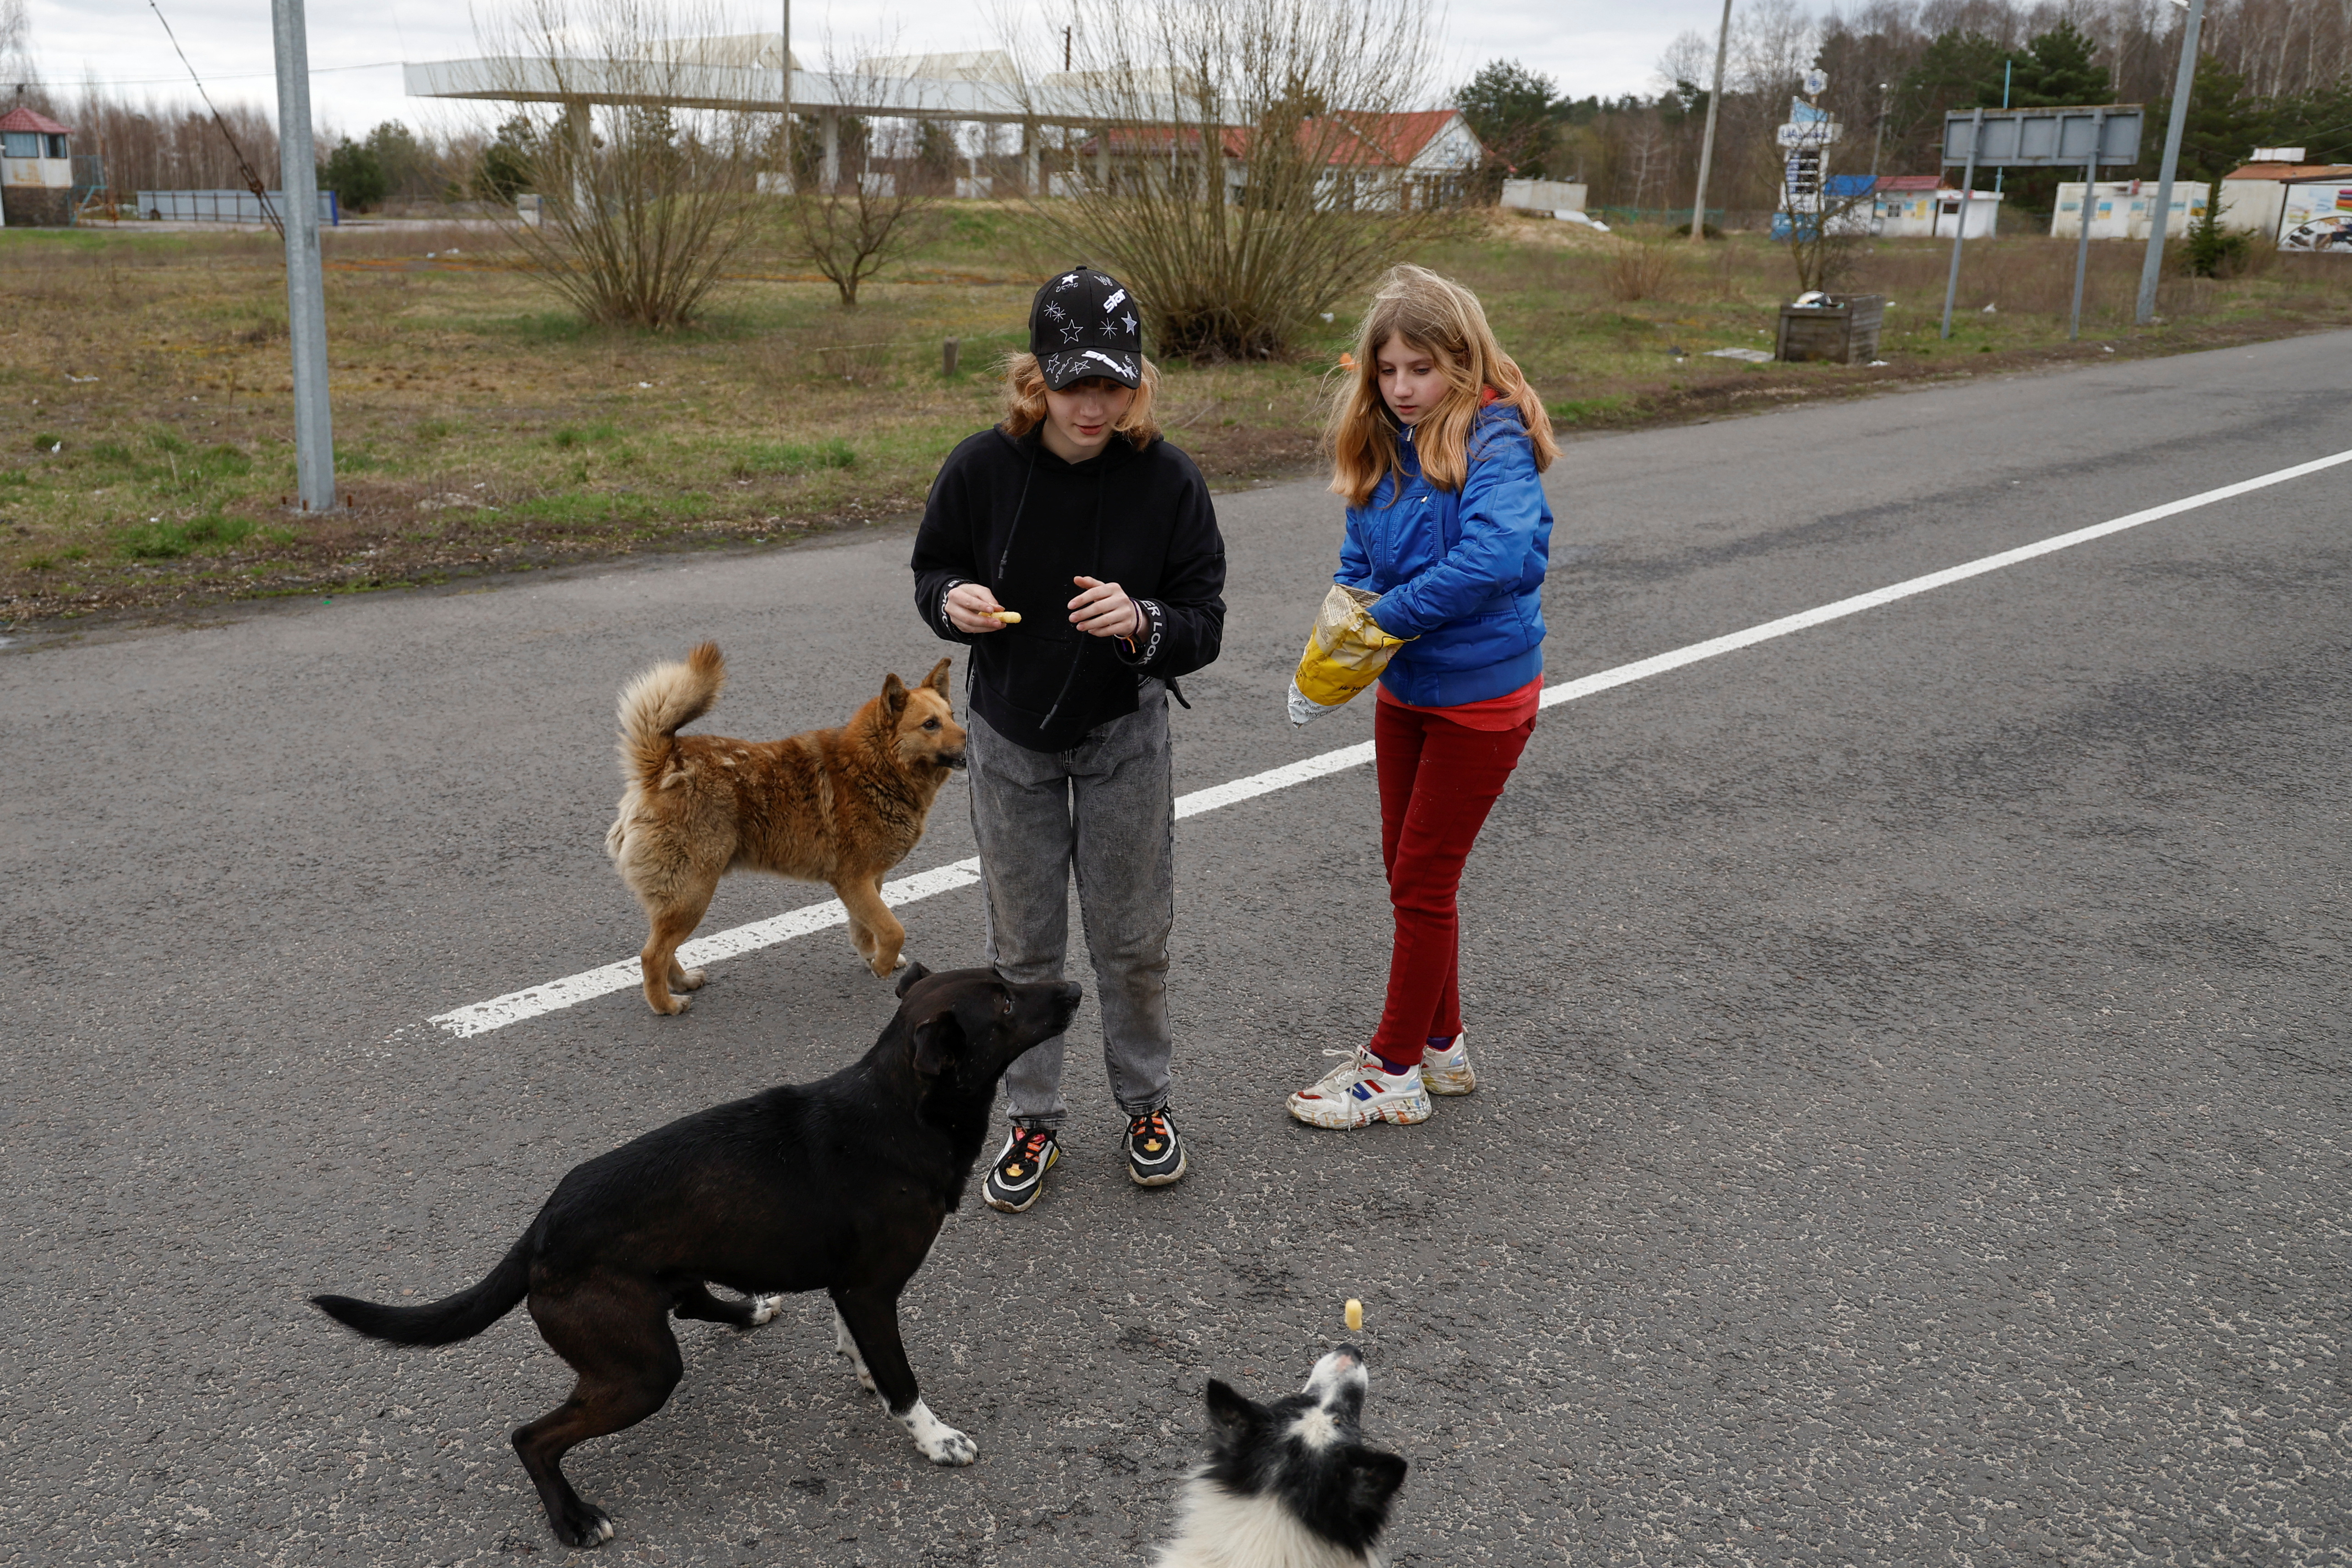 Sisters Anastasiia and Kseniia Hrinchenko, who were taken to Russia, feed dogs after returning via the Ukraine-Belarus border, in Volyn region